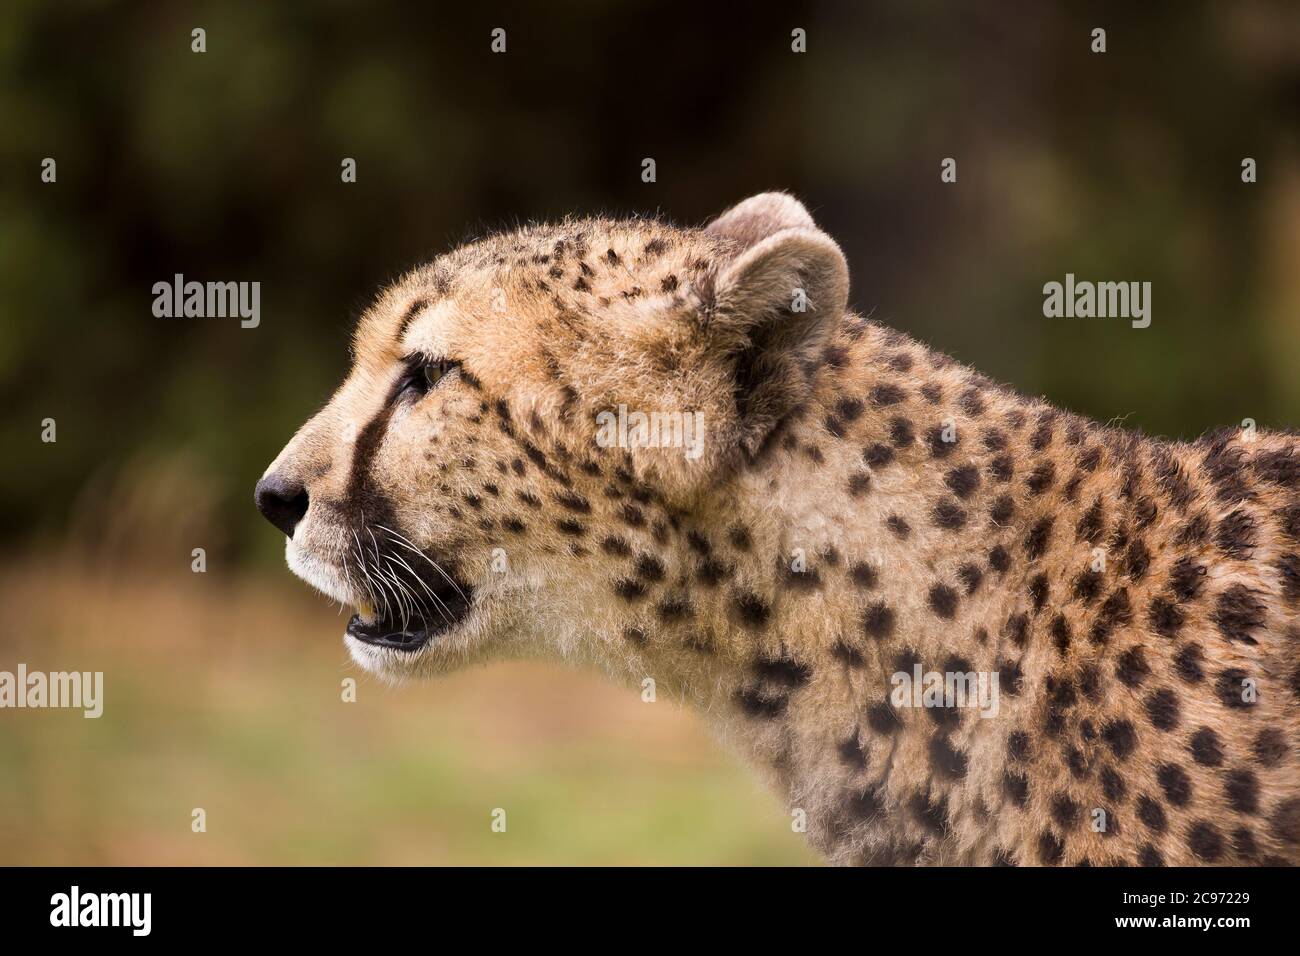 Close-up, side view of an isolated cheetah head (Acinonyx jubatus). Big cat animal face: alert, staring, facing left. African wildlife. Stock Photo